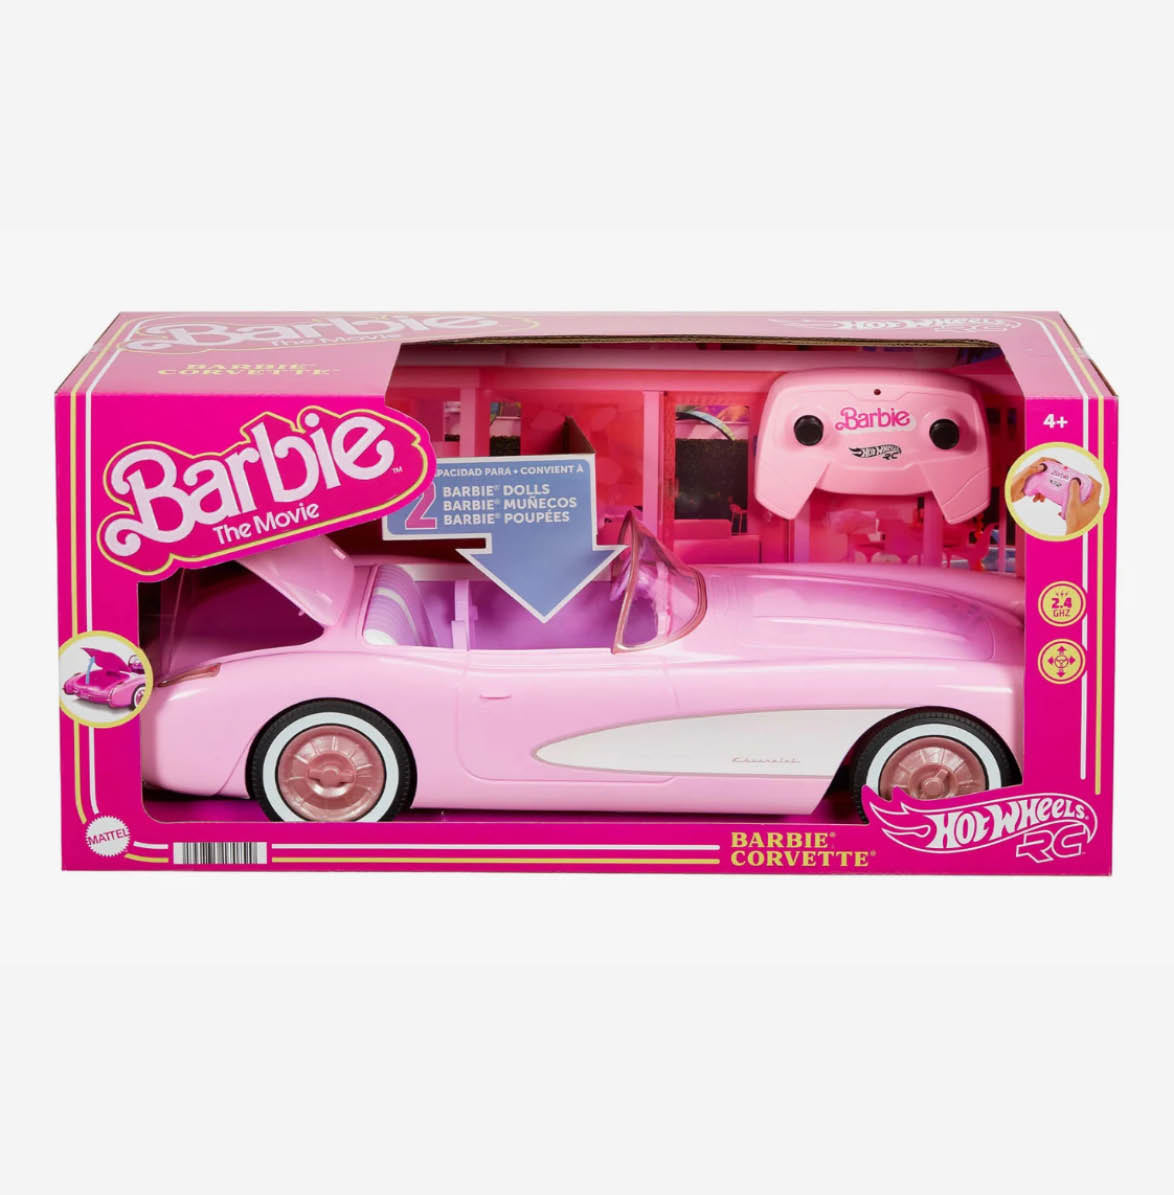 Barbie Movie Pink Corvette in box